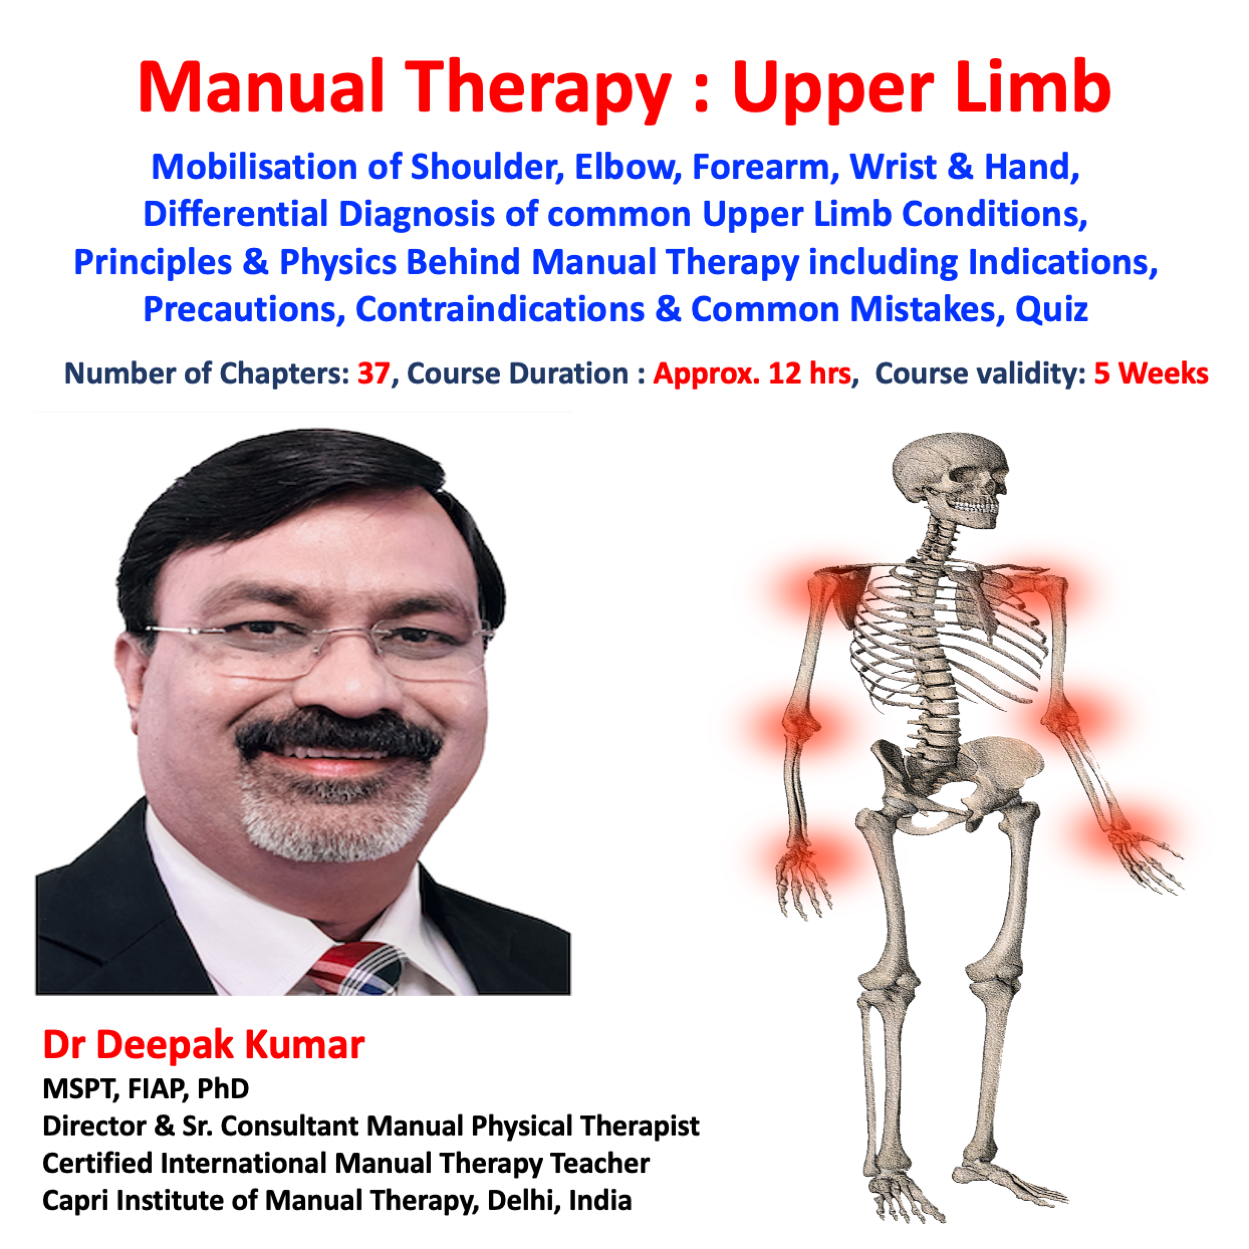 Manual Therapy : Upper Limb